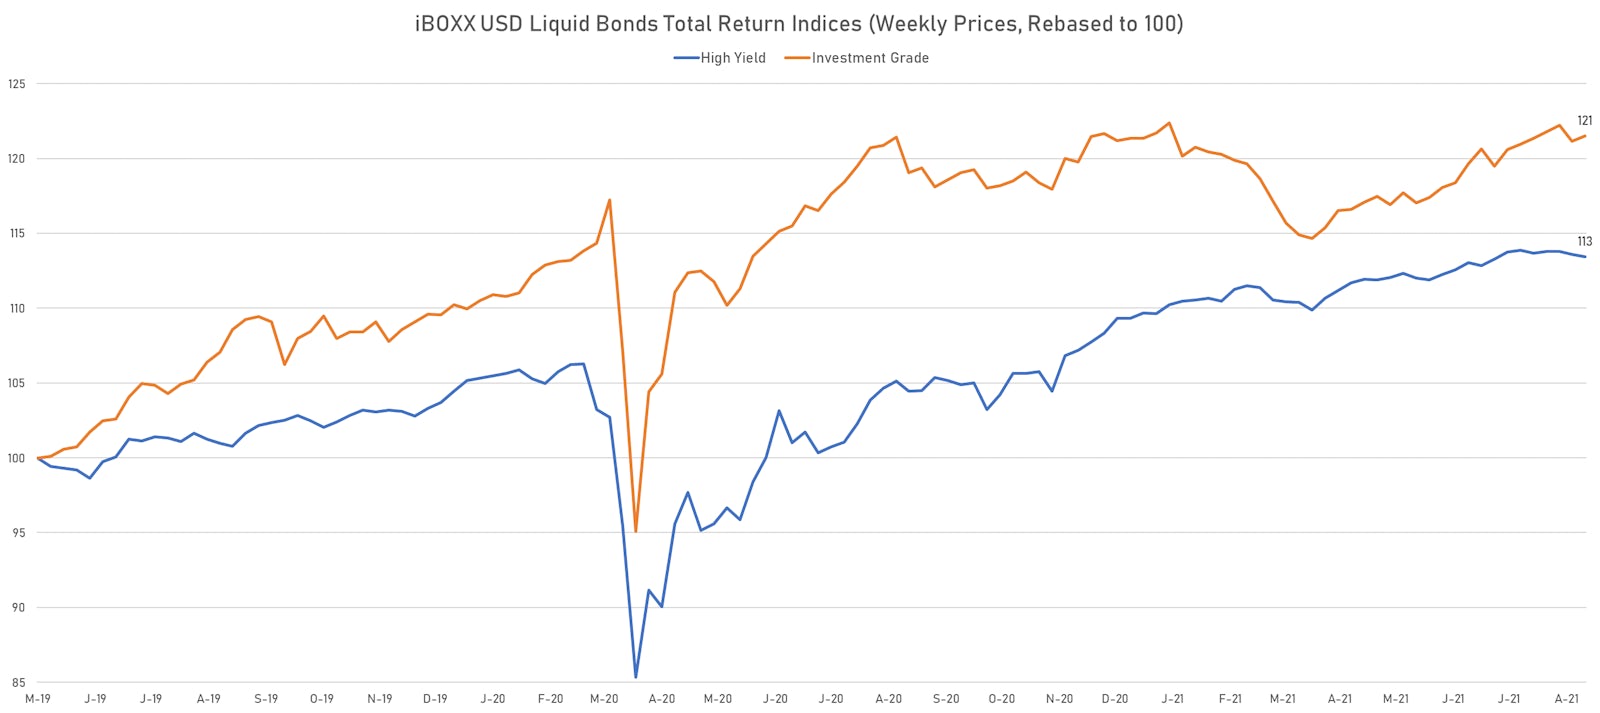 iBOXX USD Liquid Bonds Total Returns IG & HY Indices | Sources: ϕpost, Refinitiv data